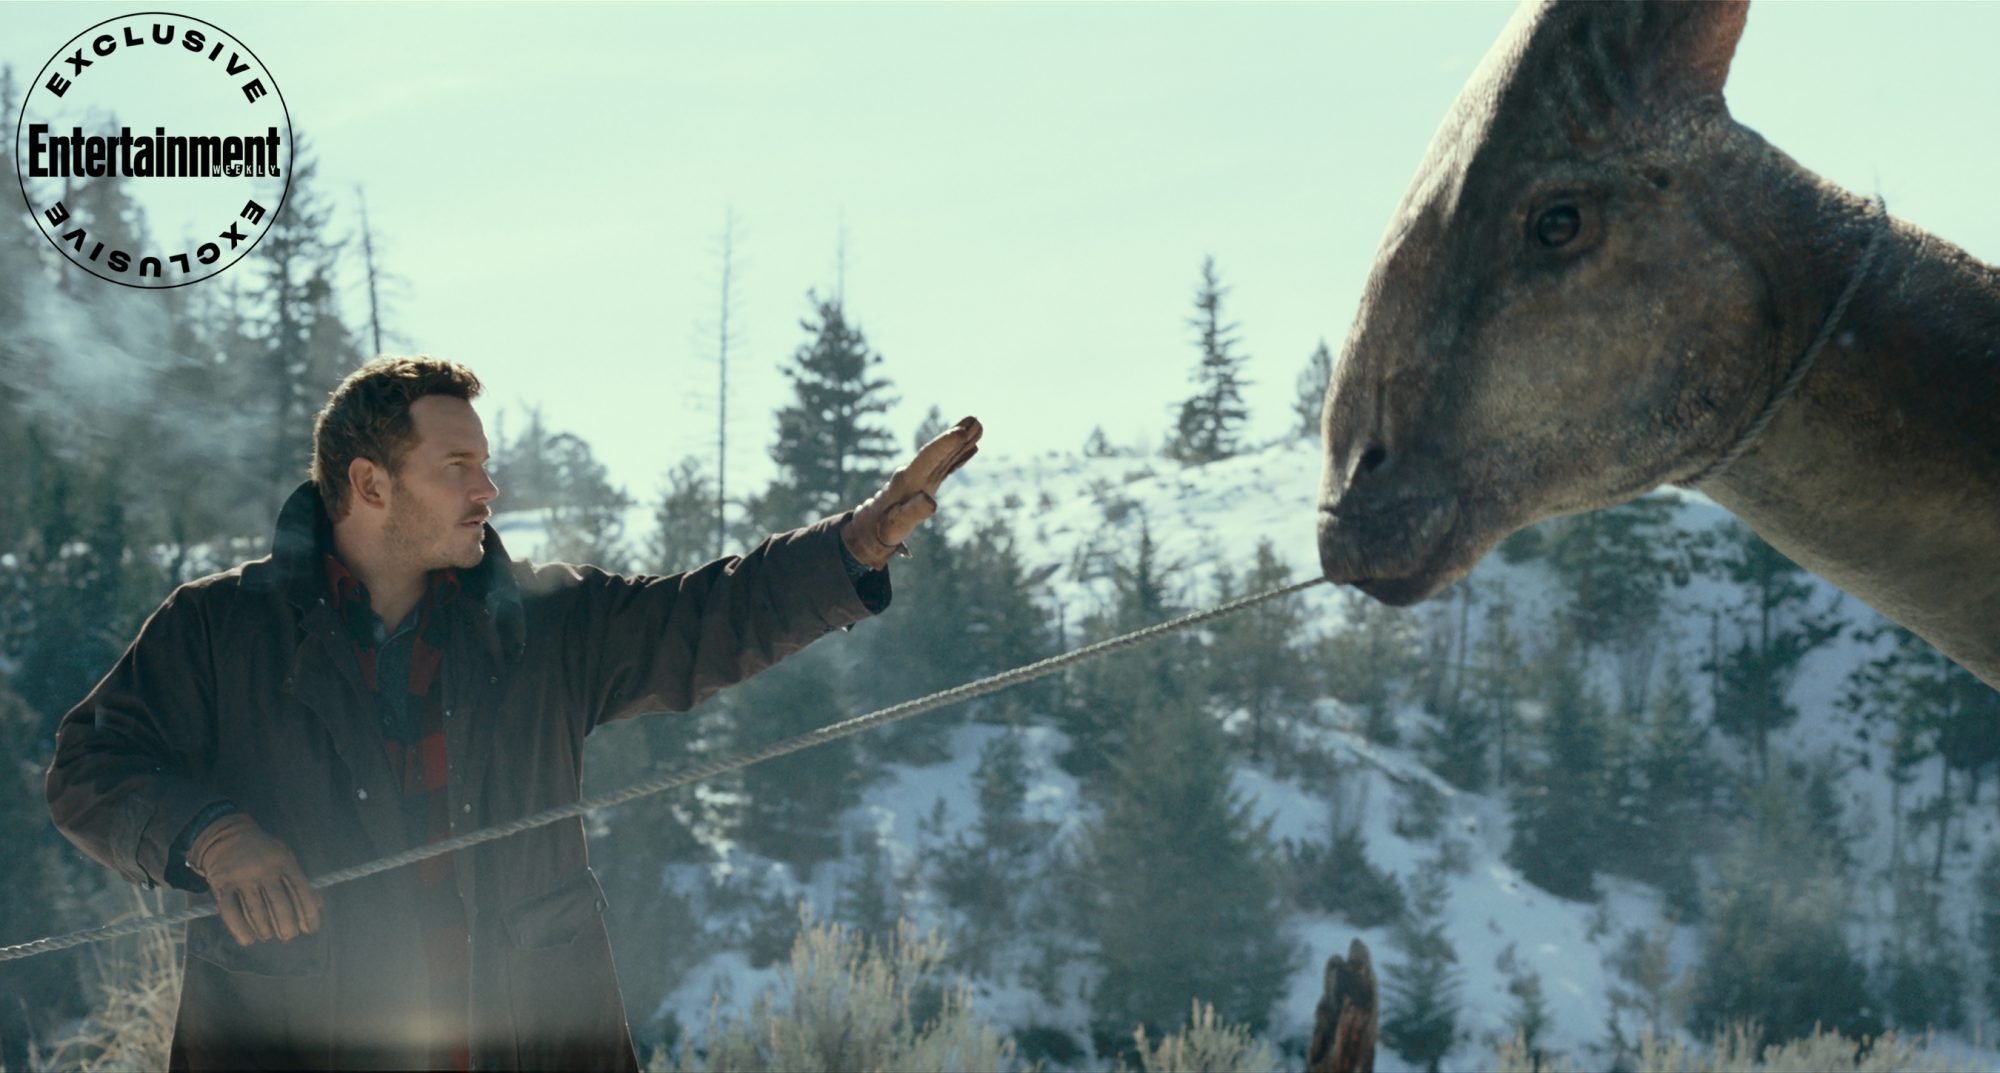 Jurassic World Dominion photo shows Chris Pratt still trying to save dinosaurs